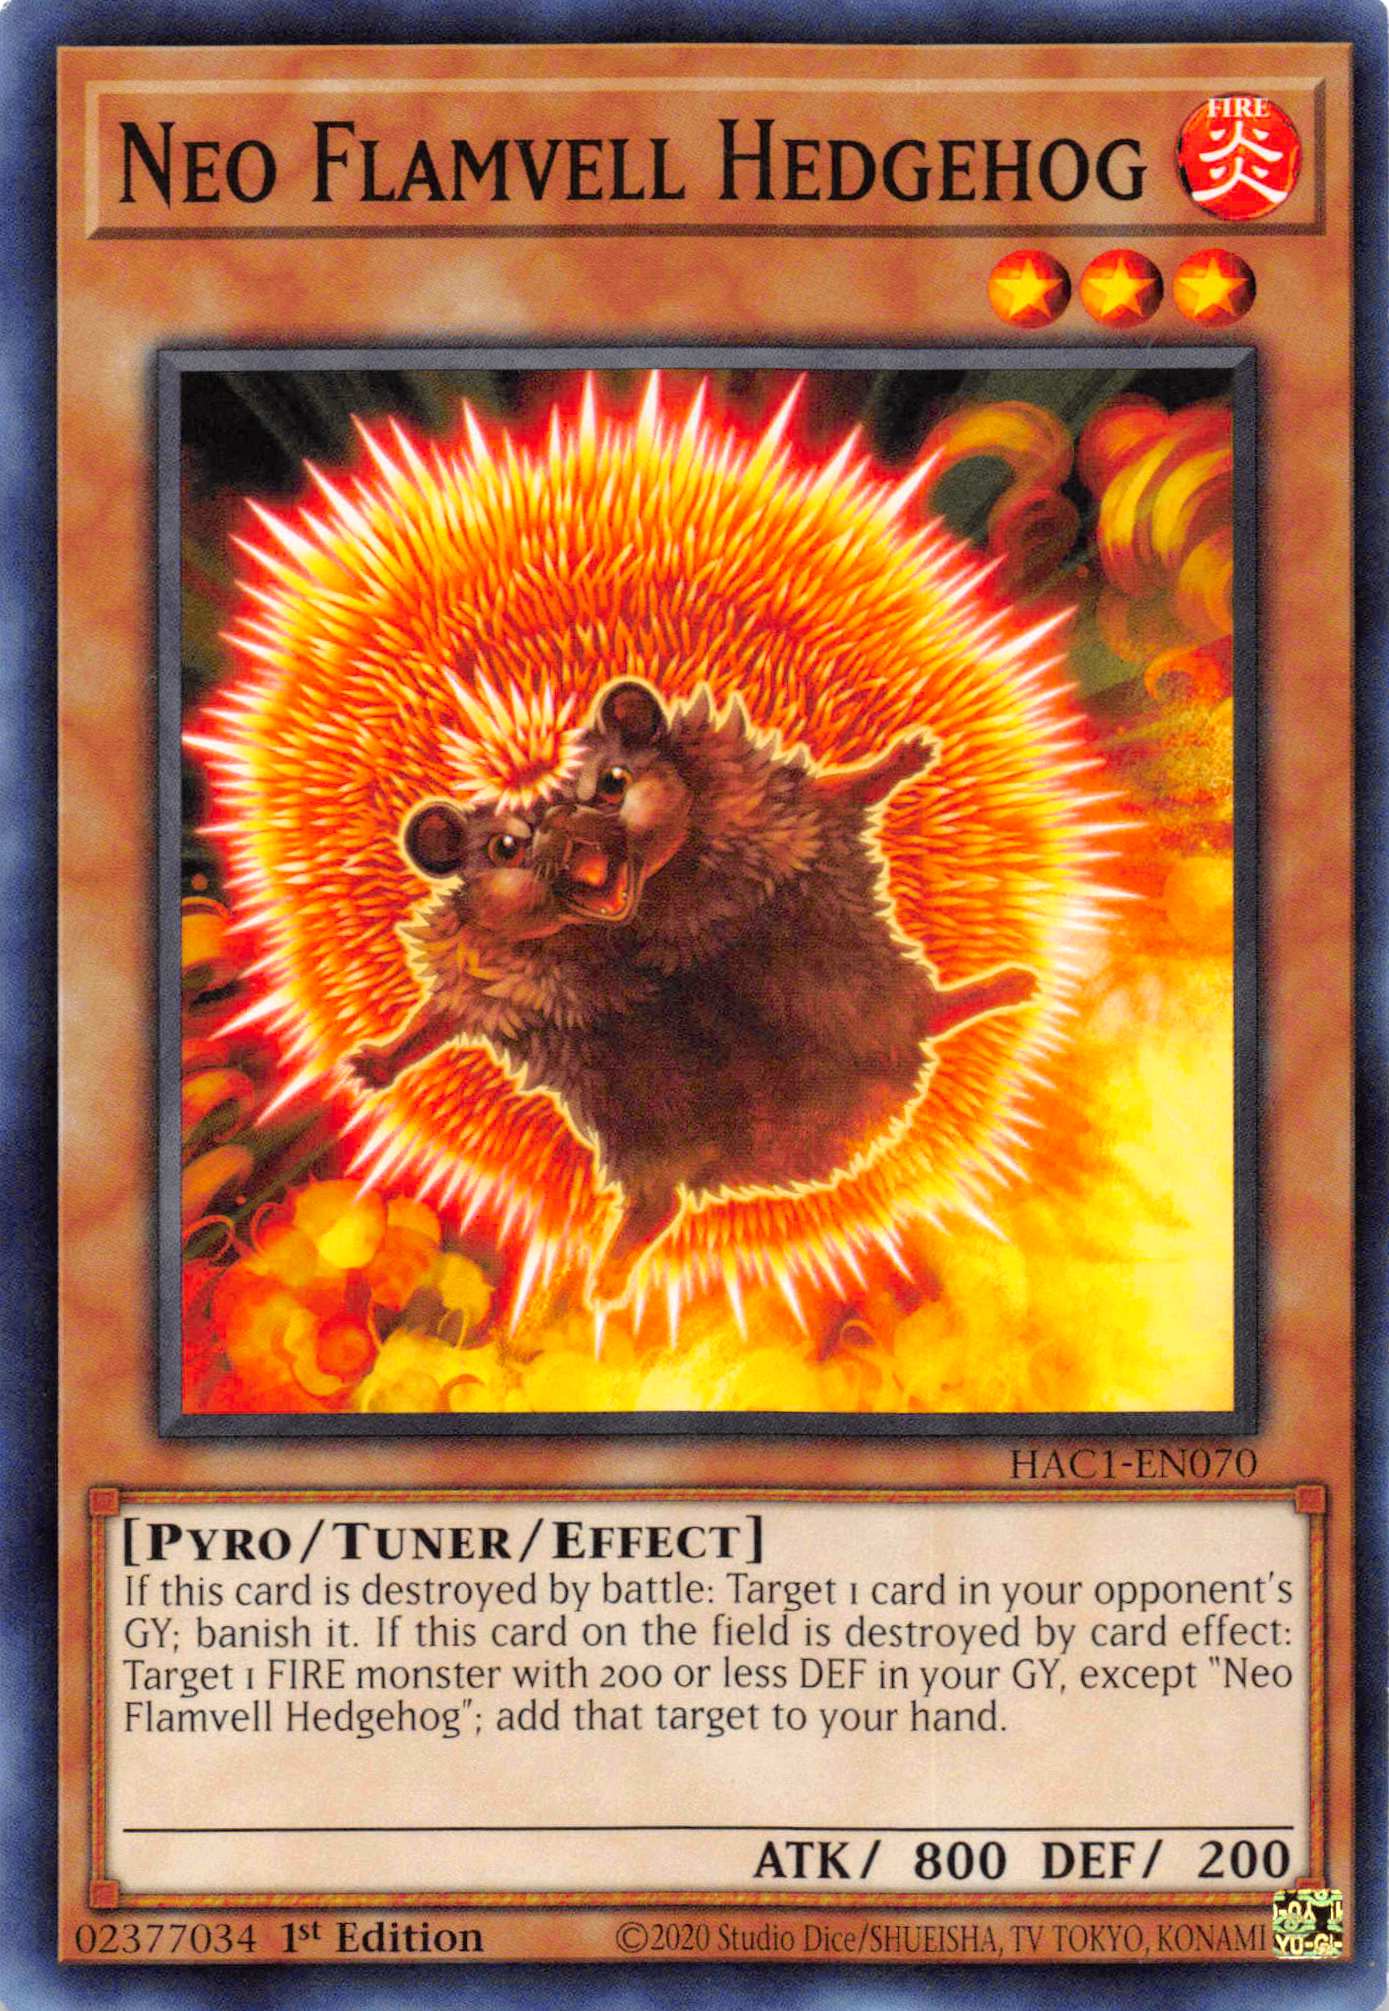 Neo Flamvell Hedgehog [HAC1-EN070] Common - Duel Kingdom